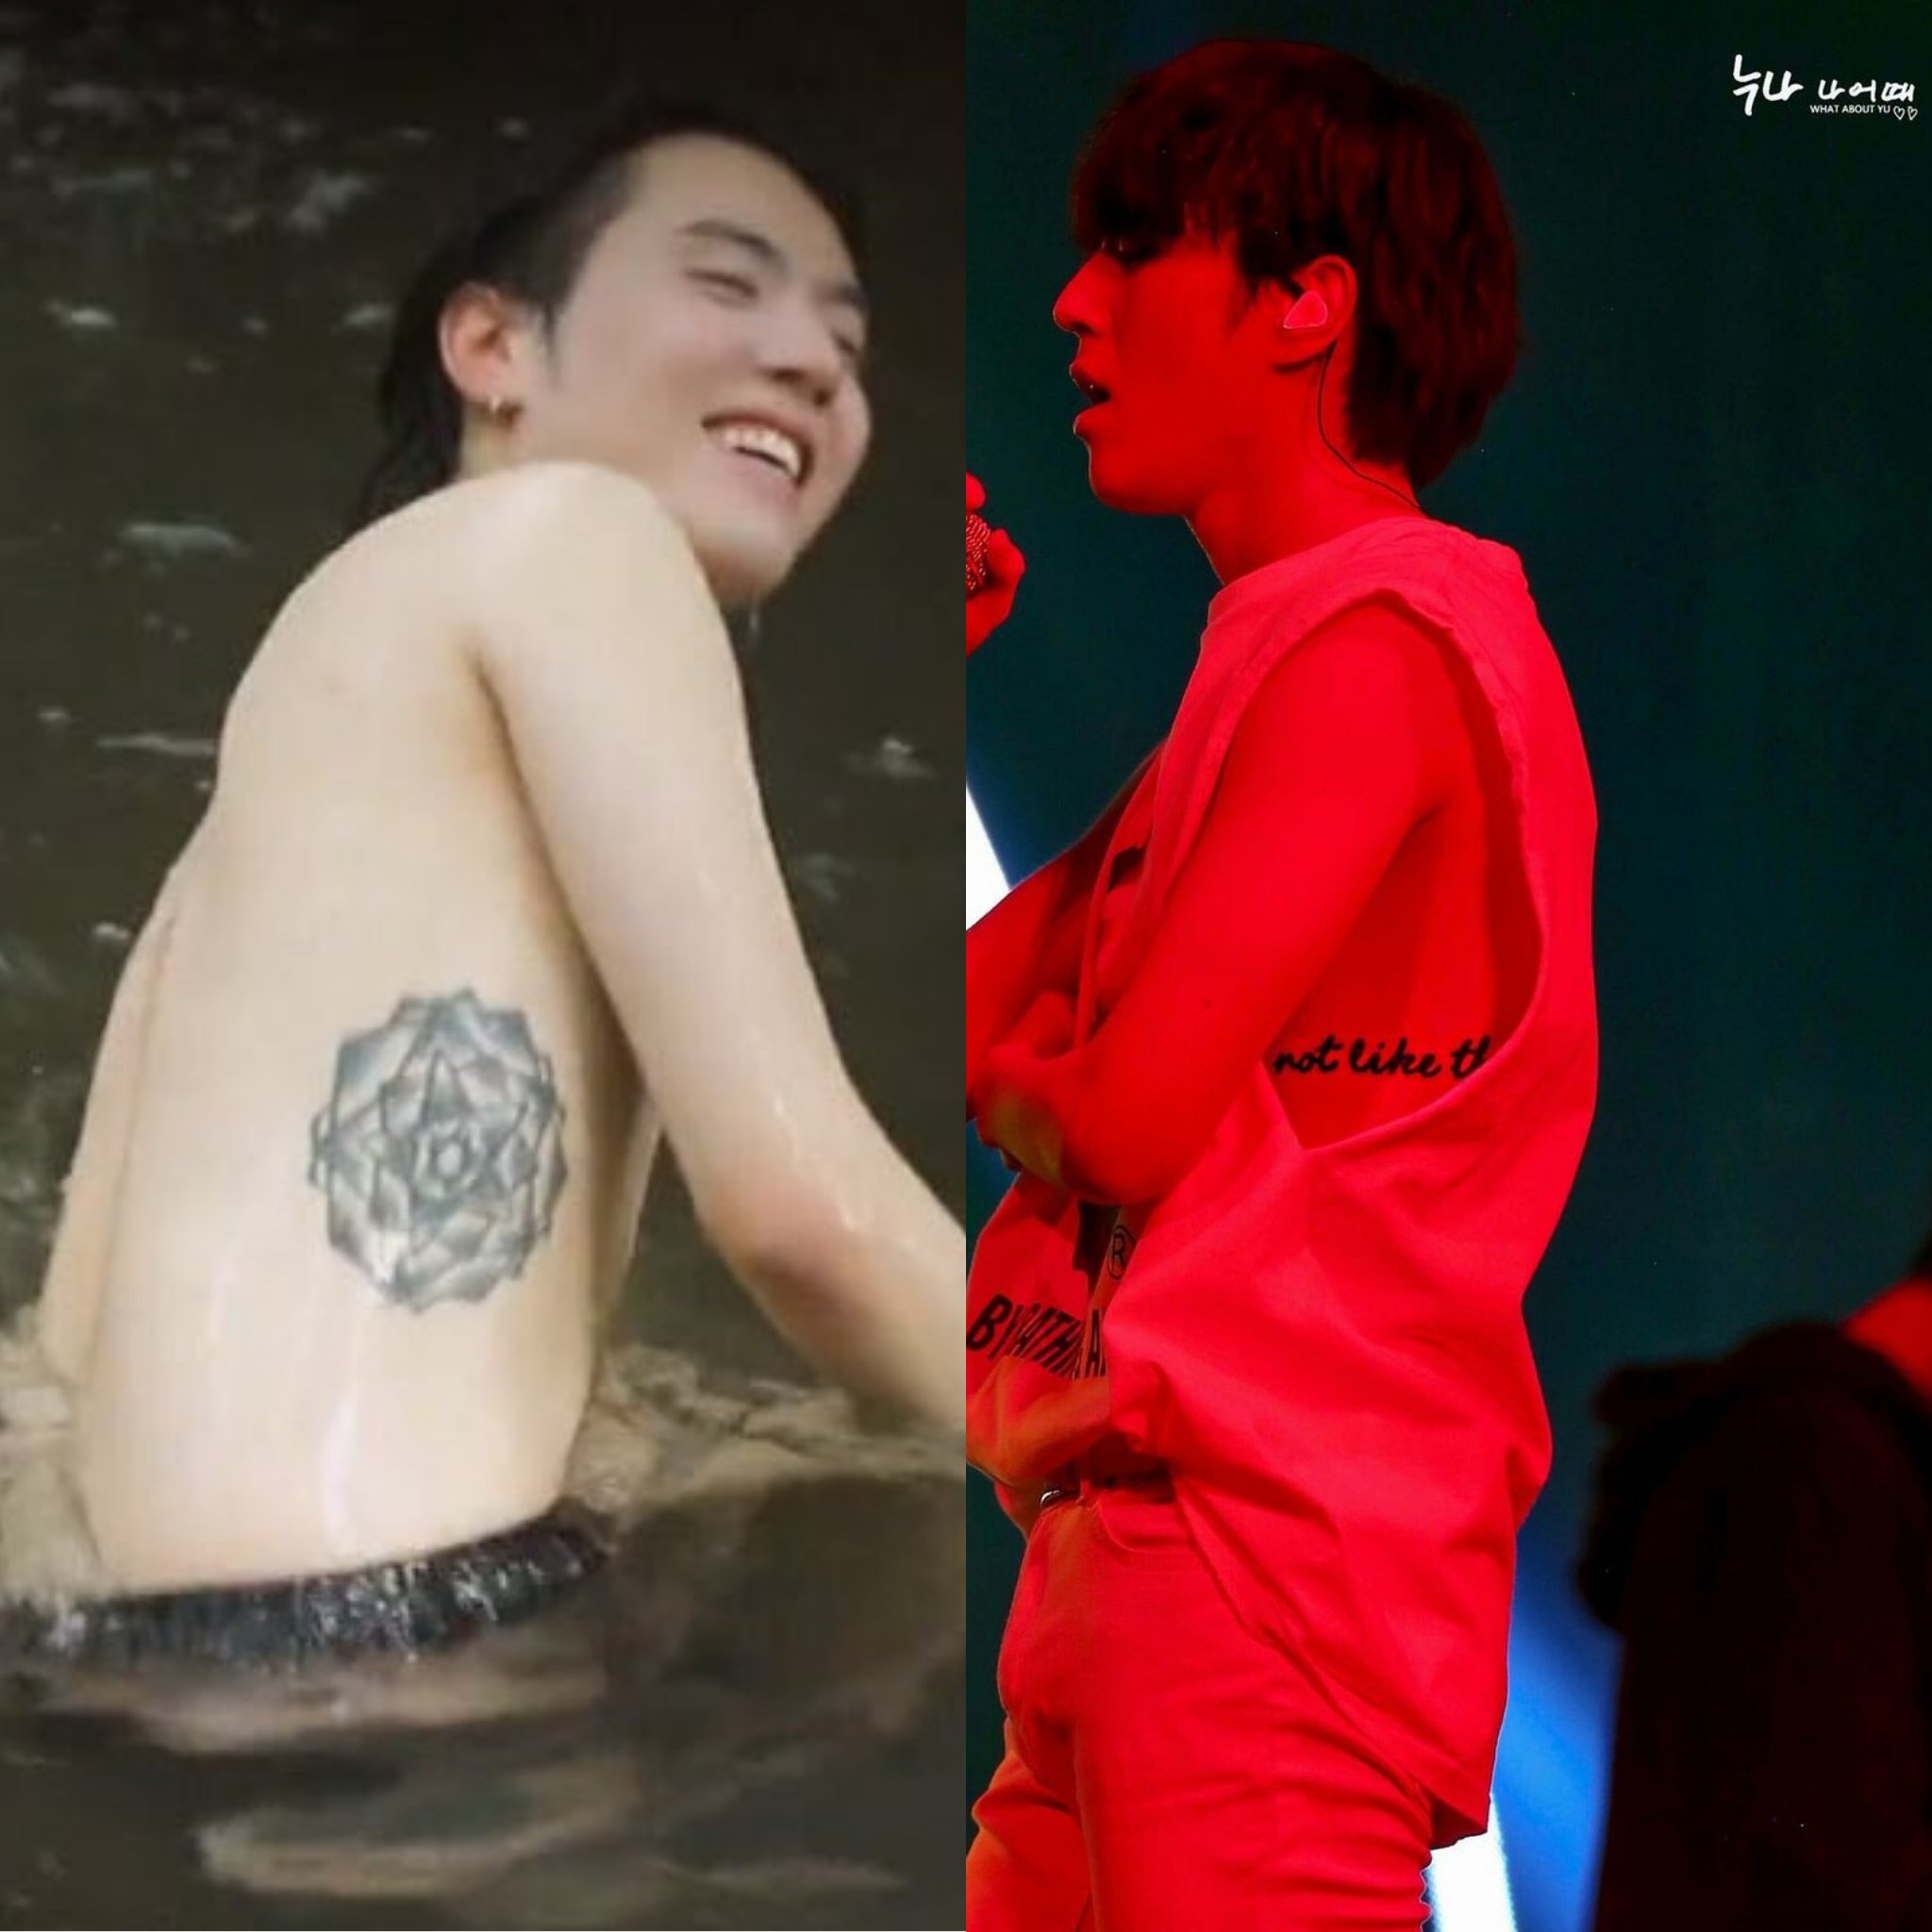 When can JYP idols get tattoos? - Quora